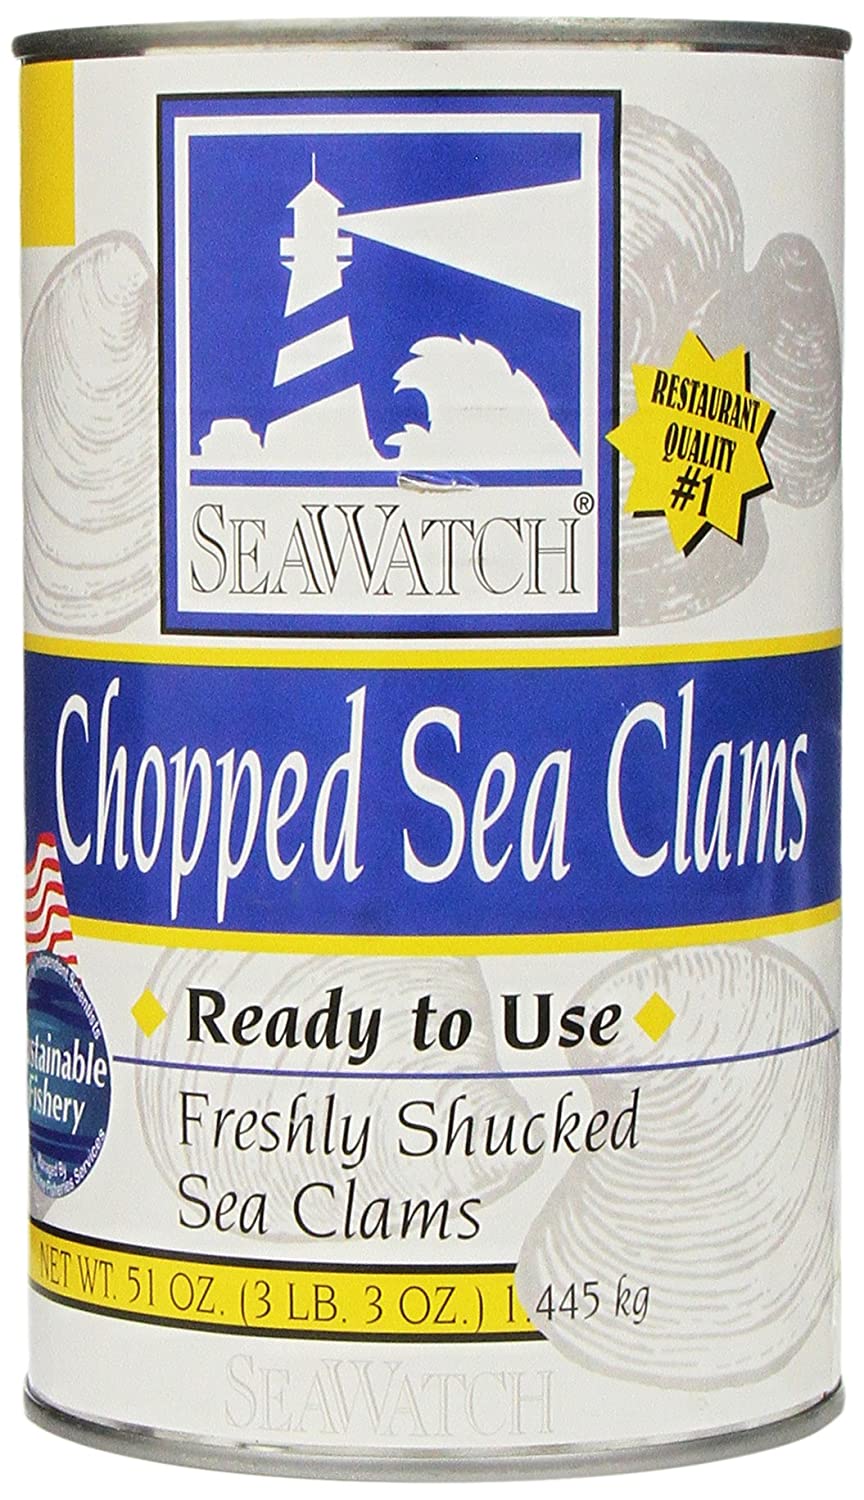 Seawatch-Chopped-Sea-Clams-min